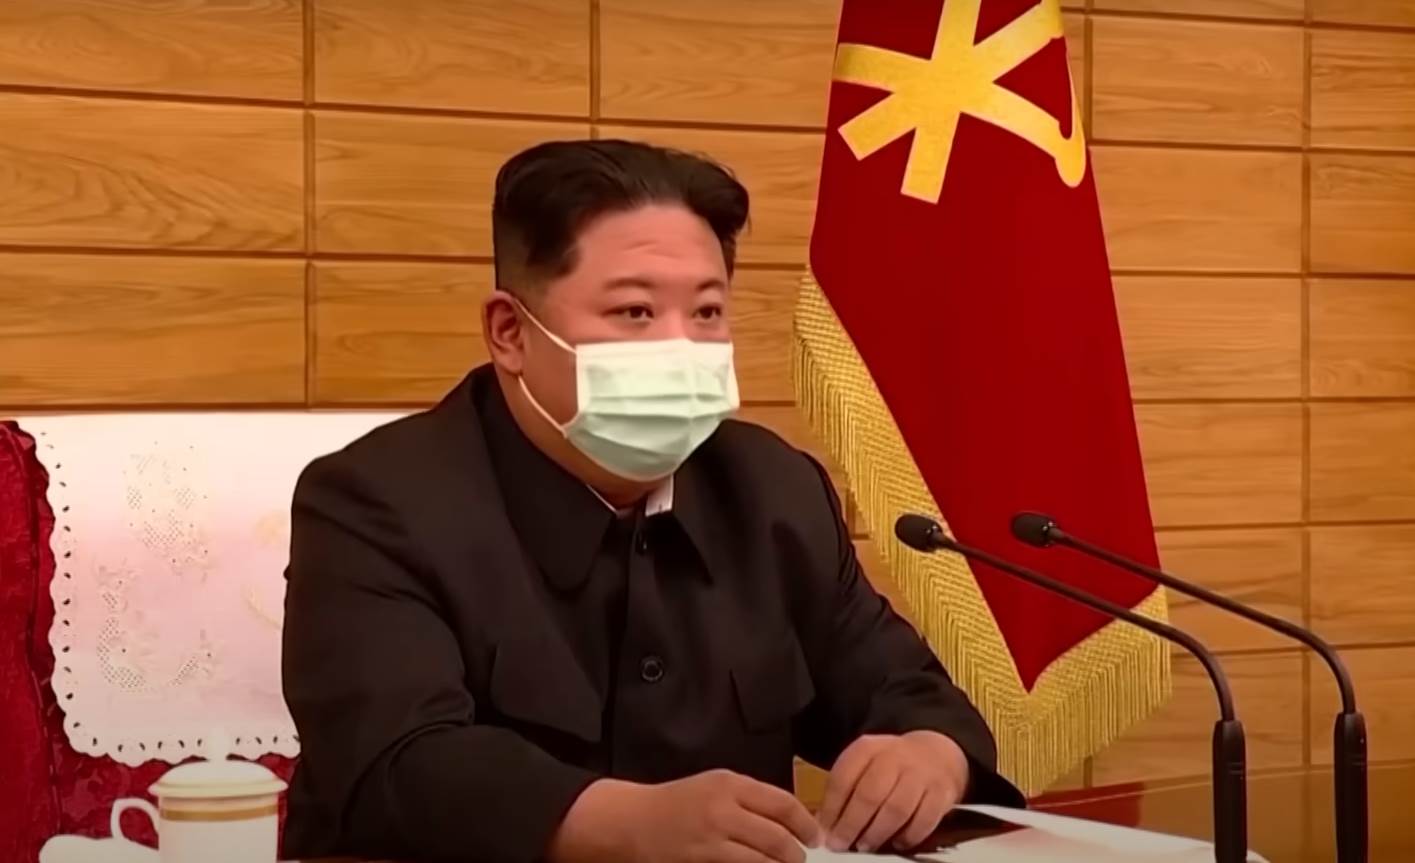  Građani Severne Koreje dobili uputstvo za borbu protiv korone 